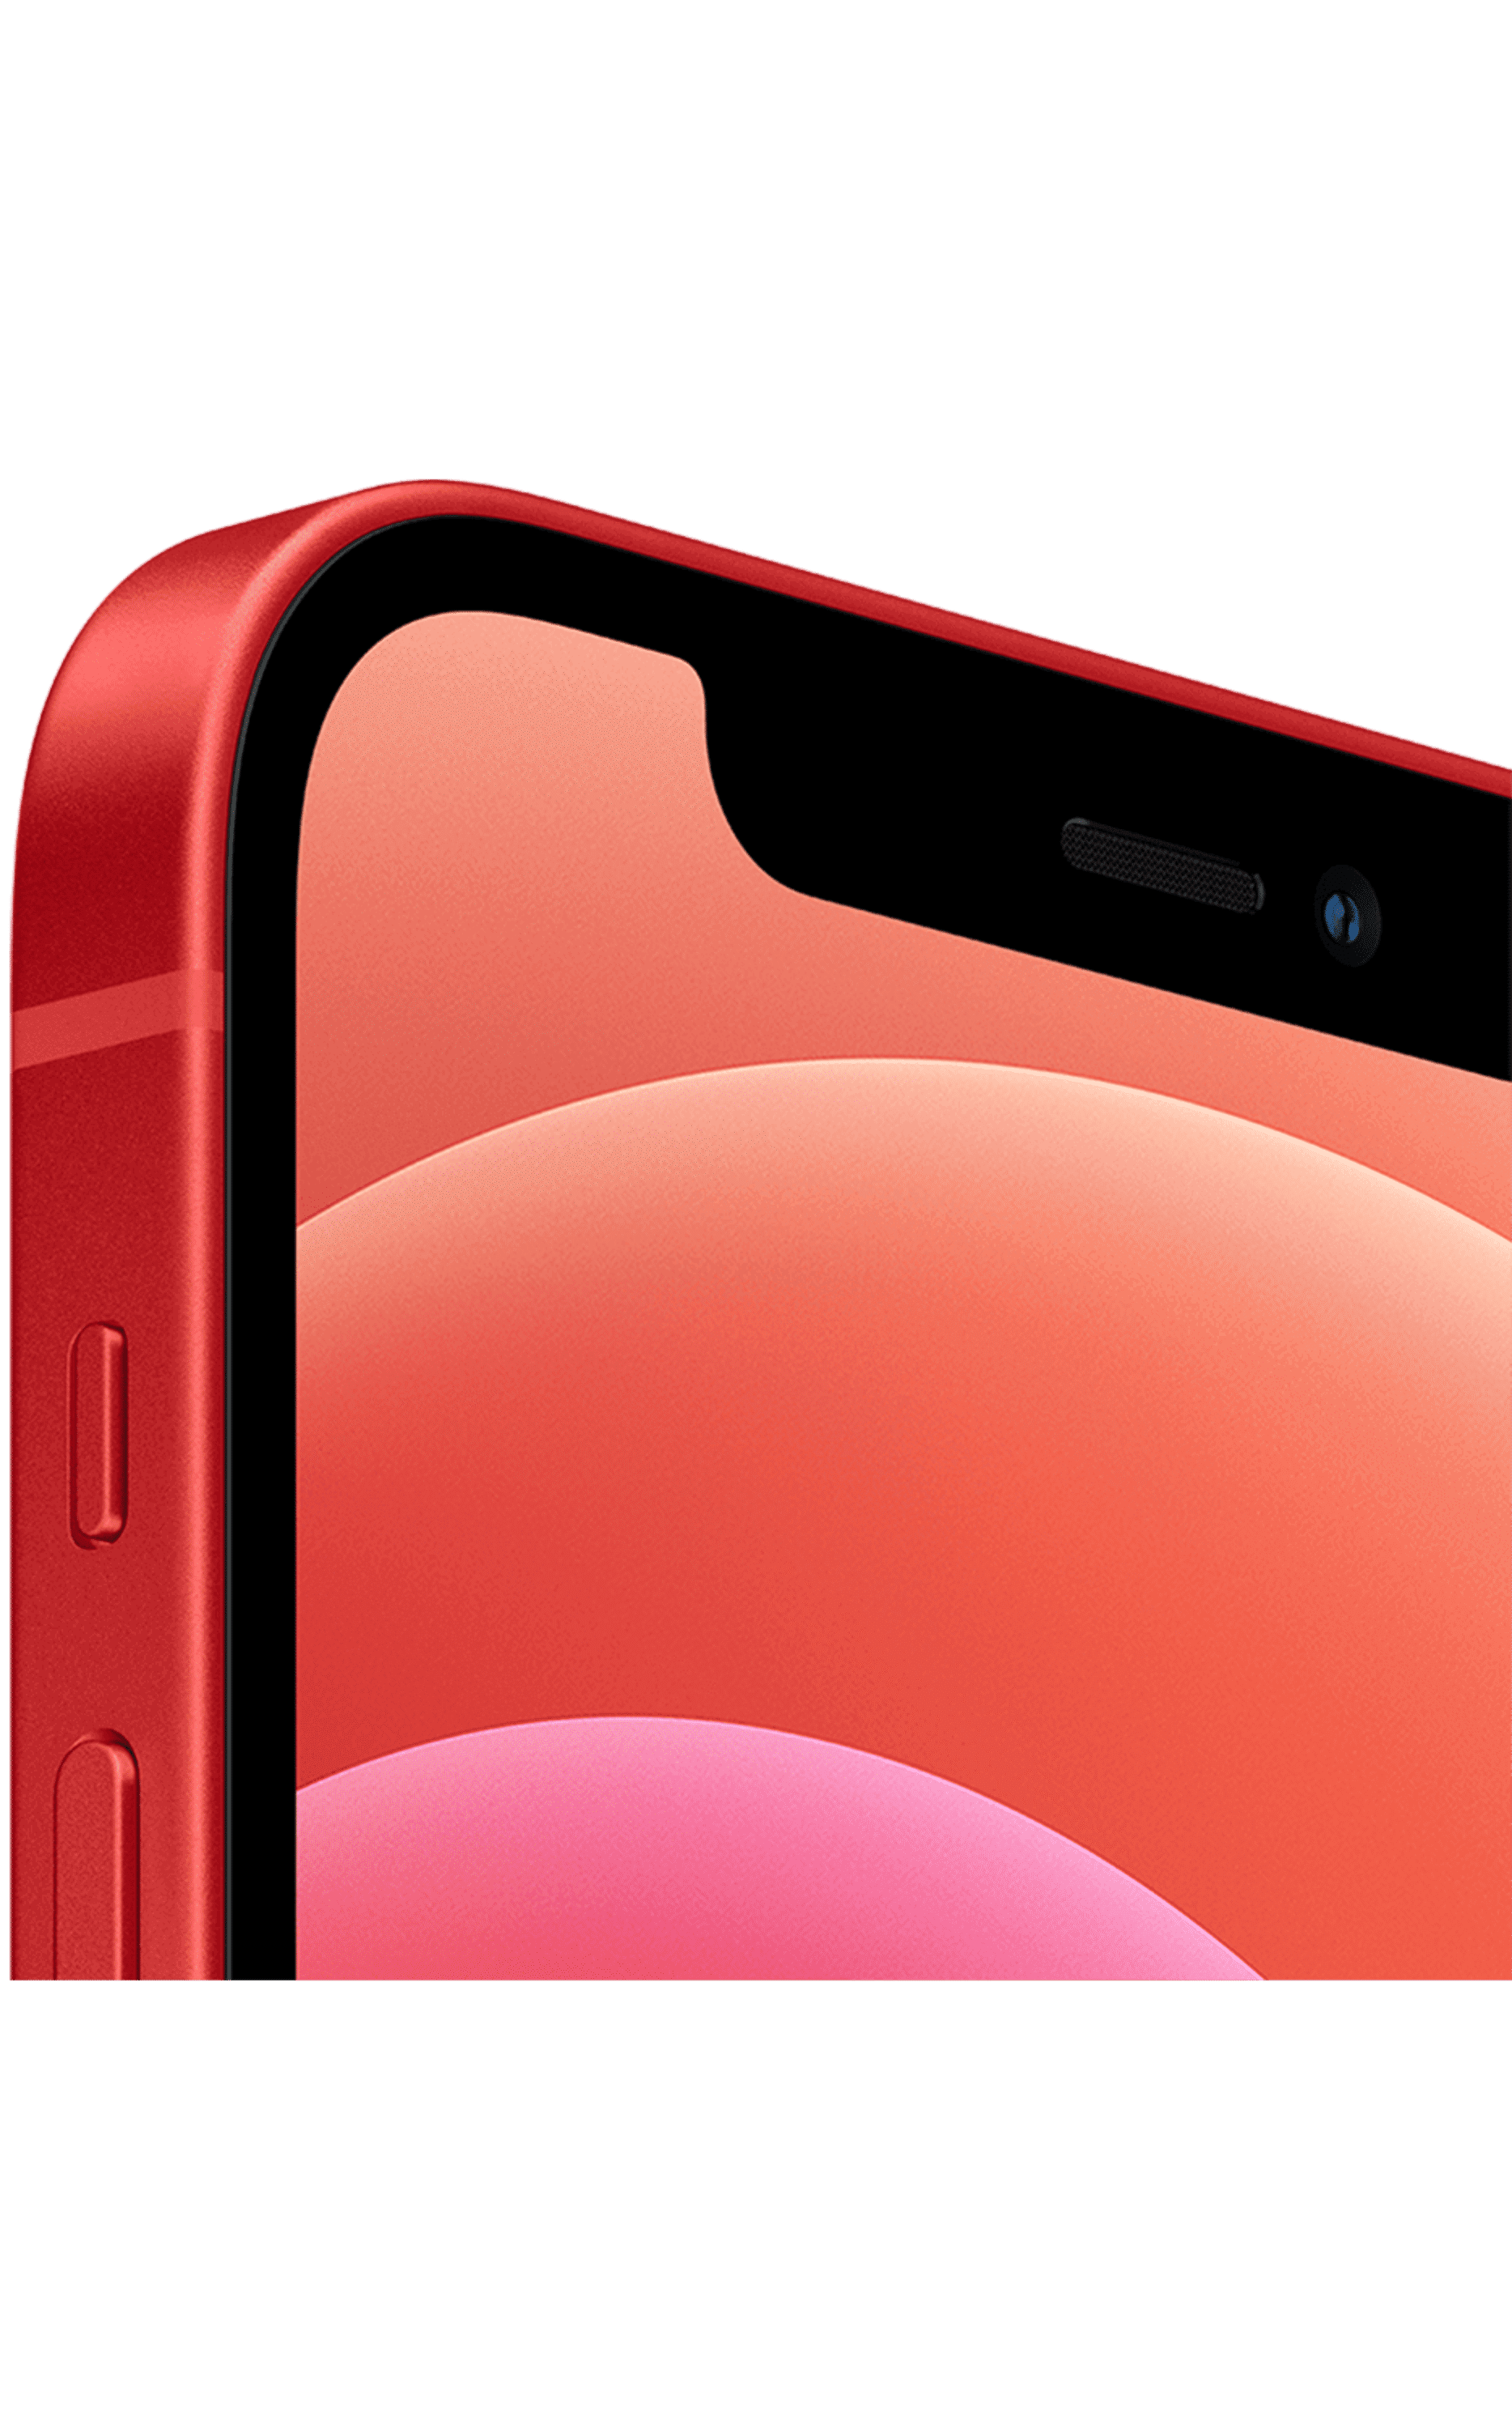 Apple iPhone 12 64GB GSM/CDMA Fully Unlocked (AT&T+T-Mobile+Verizon+Sprint)  - Red